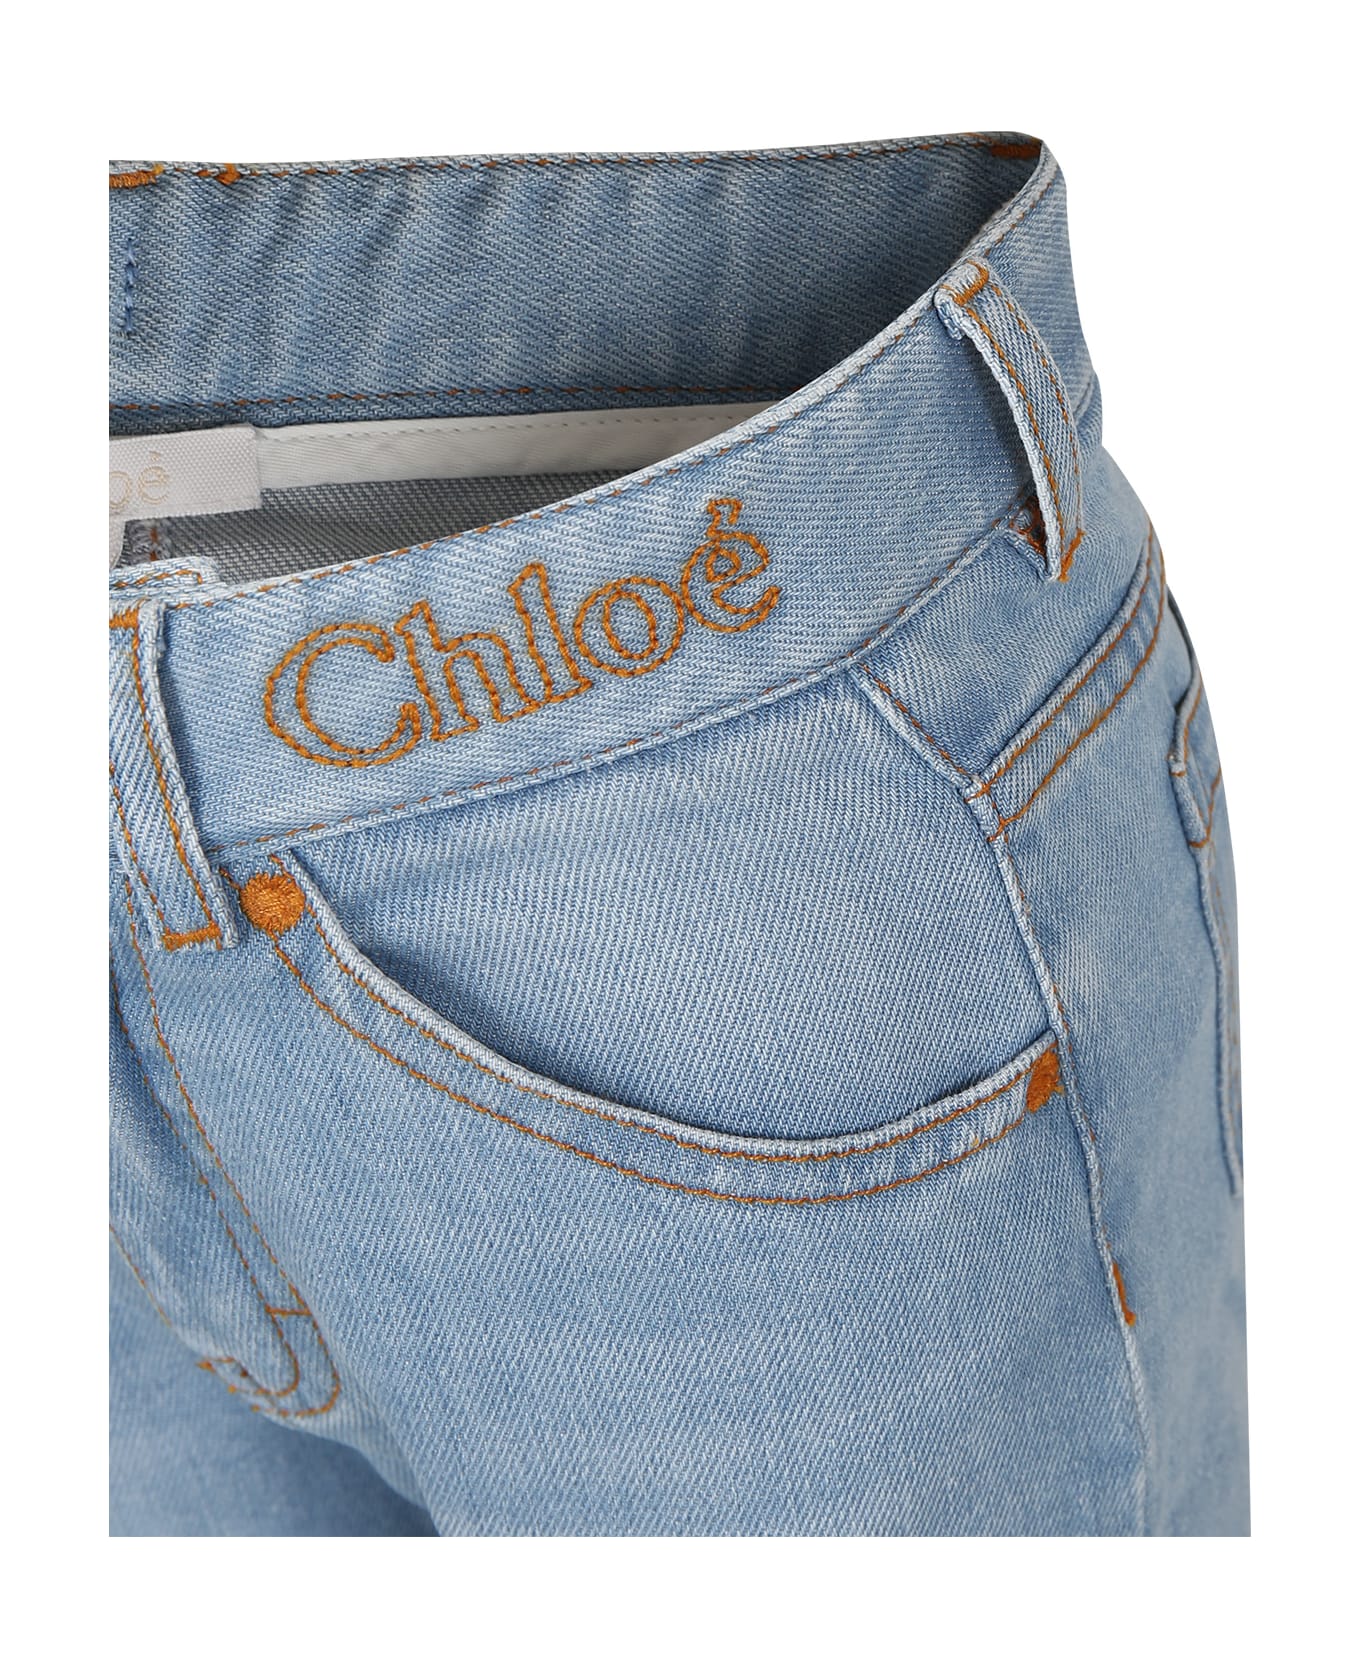 Chloé Denim Jeans For Girl With Logo - Denim